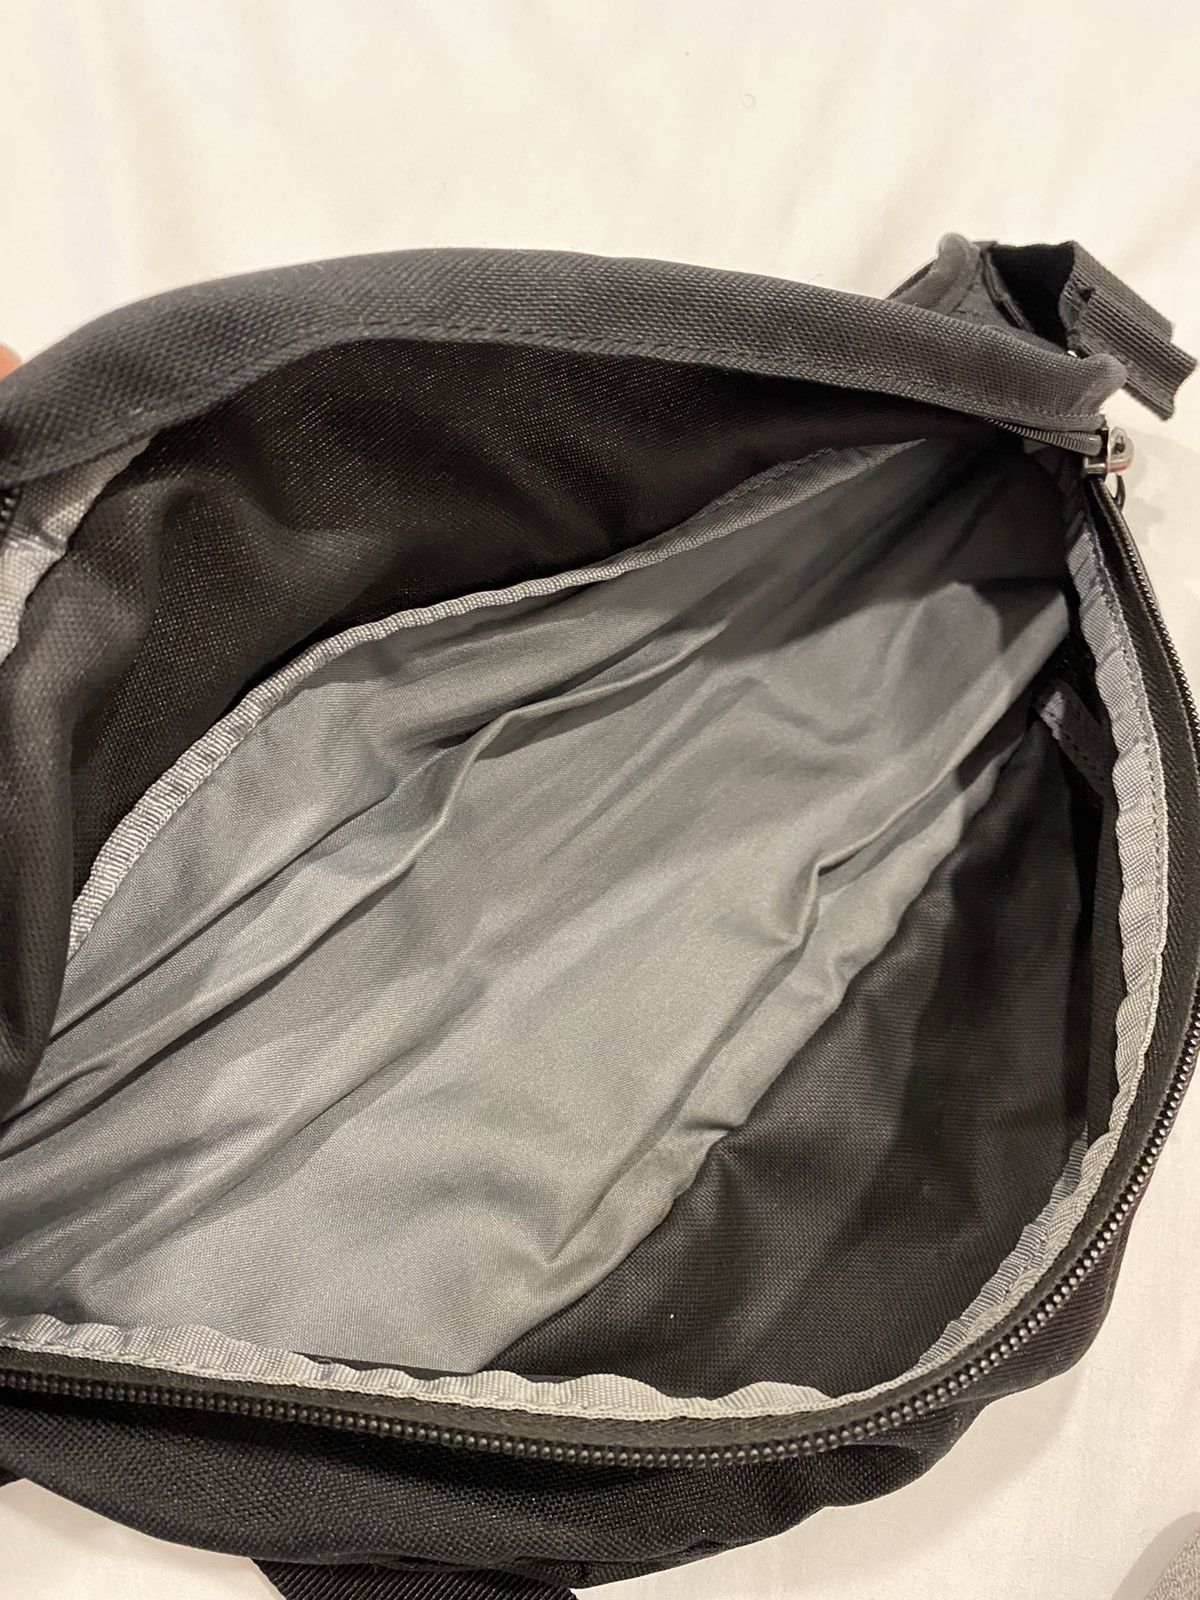 Authentic Nike Waist Pouch Bag - 10